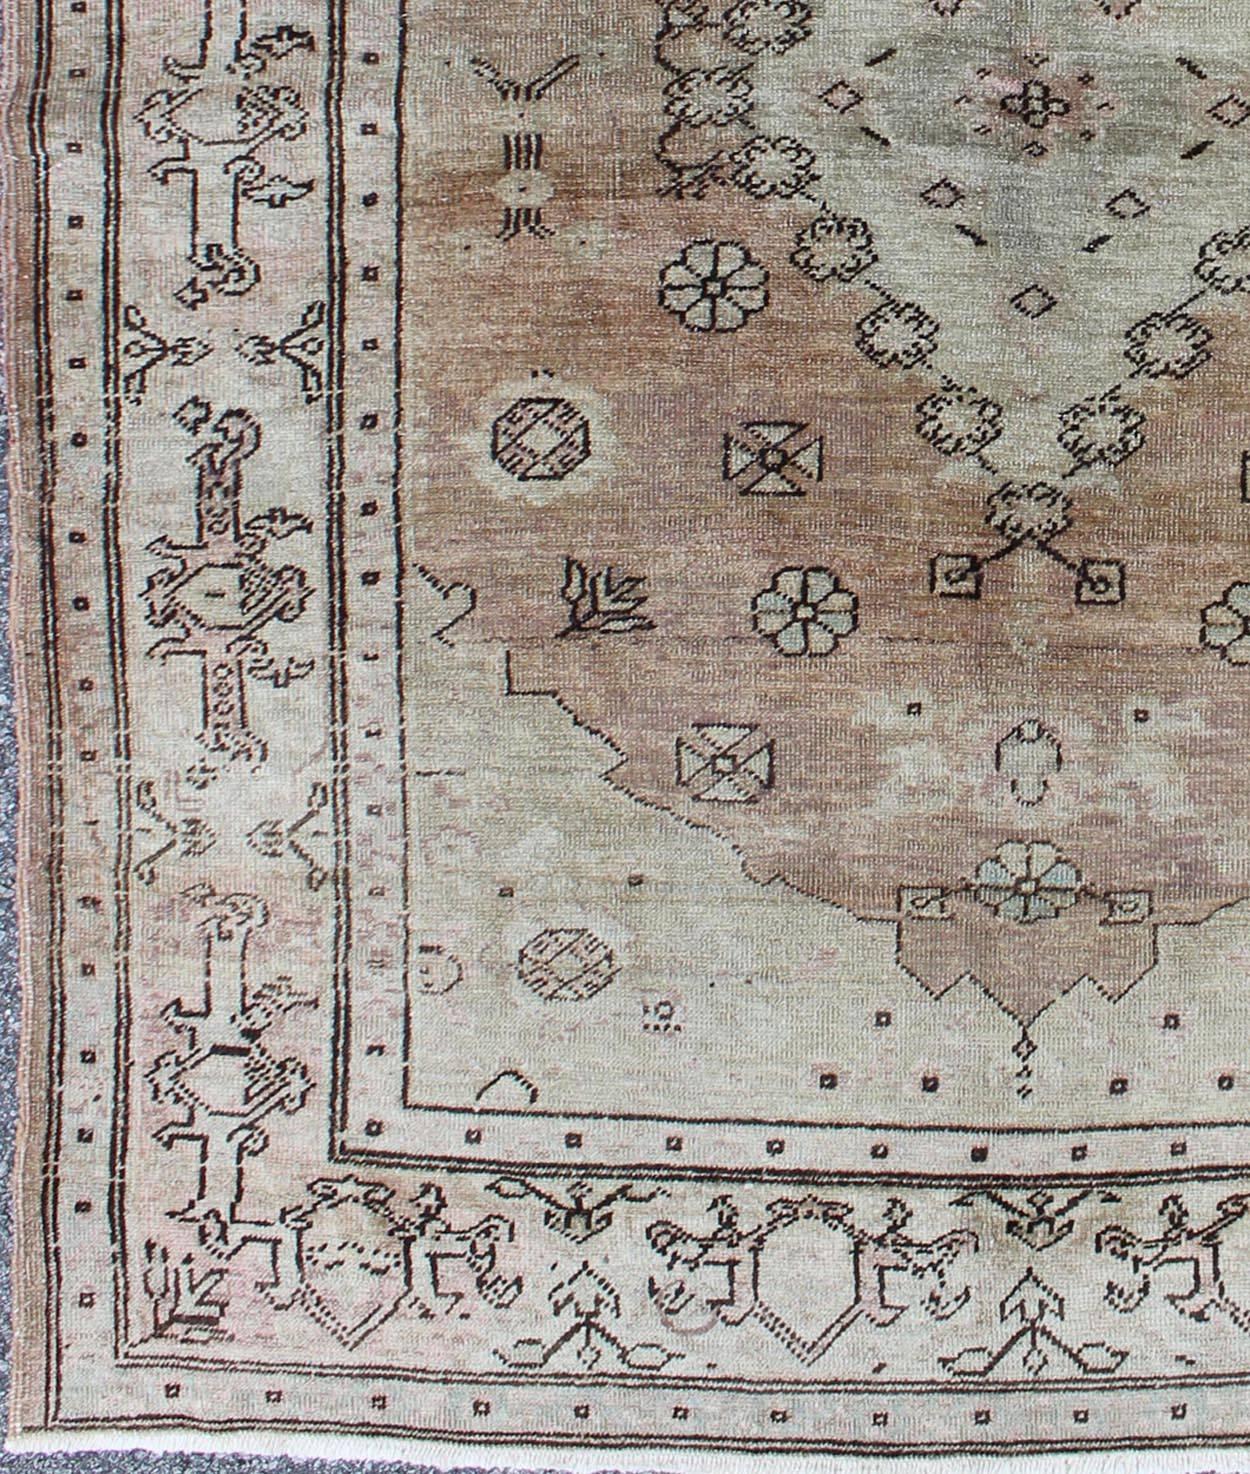   Antique Turkish Sivas Fine Rug in Light Tones with florals and Geometrics, Keivan Woven Arts/ rug TU-ALG-136572, country of origin / type: Turkey / Oushak, circa 1930's

Measures: 4'11 x 6'6.  

This sublime and enchanting antique Sivas rug has